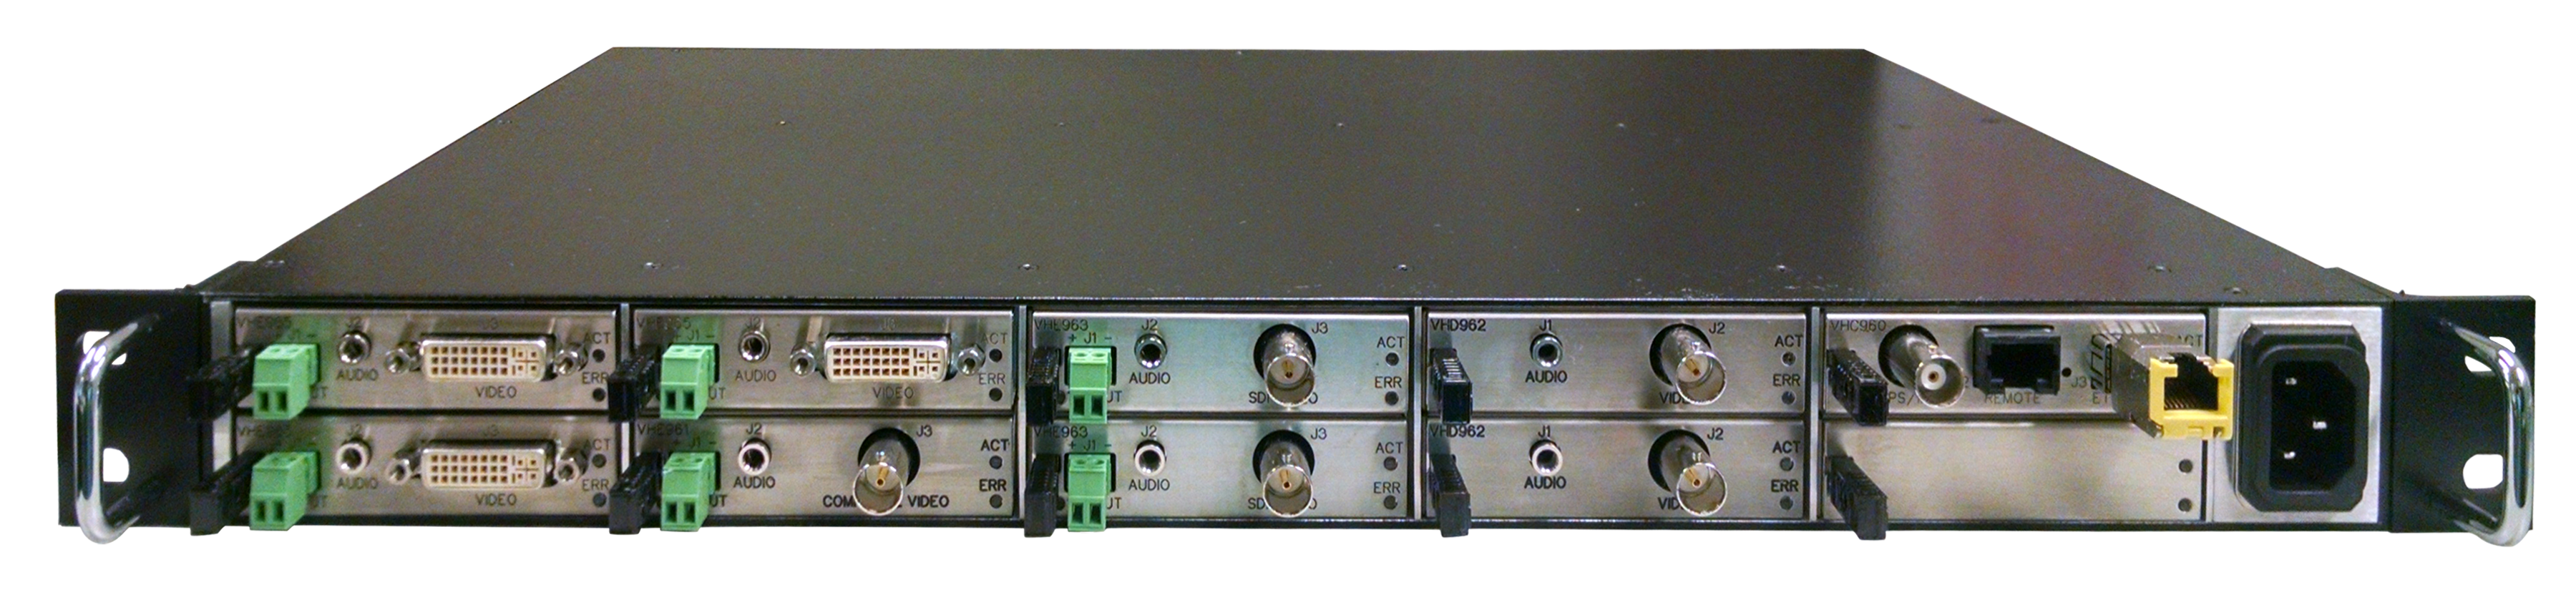 Model 9610 Series Video Distribution System